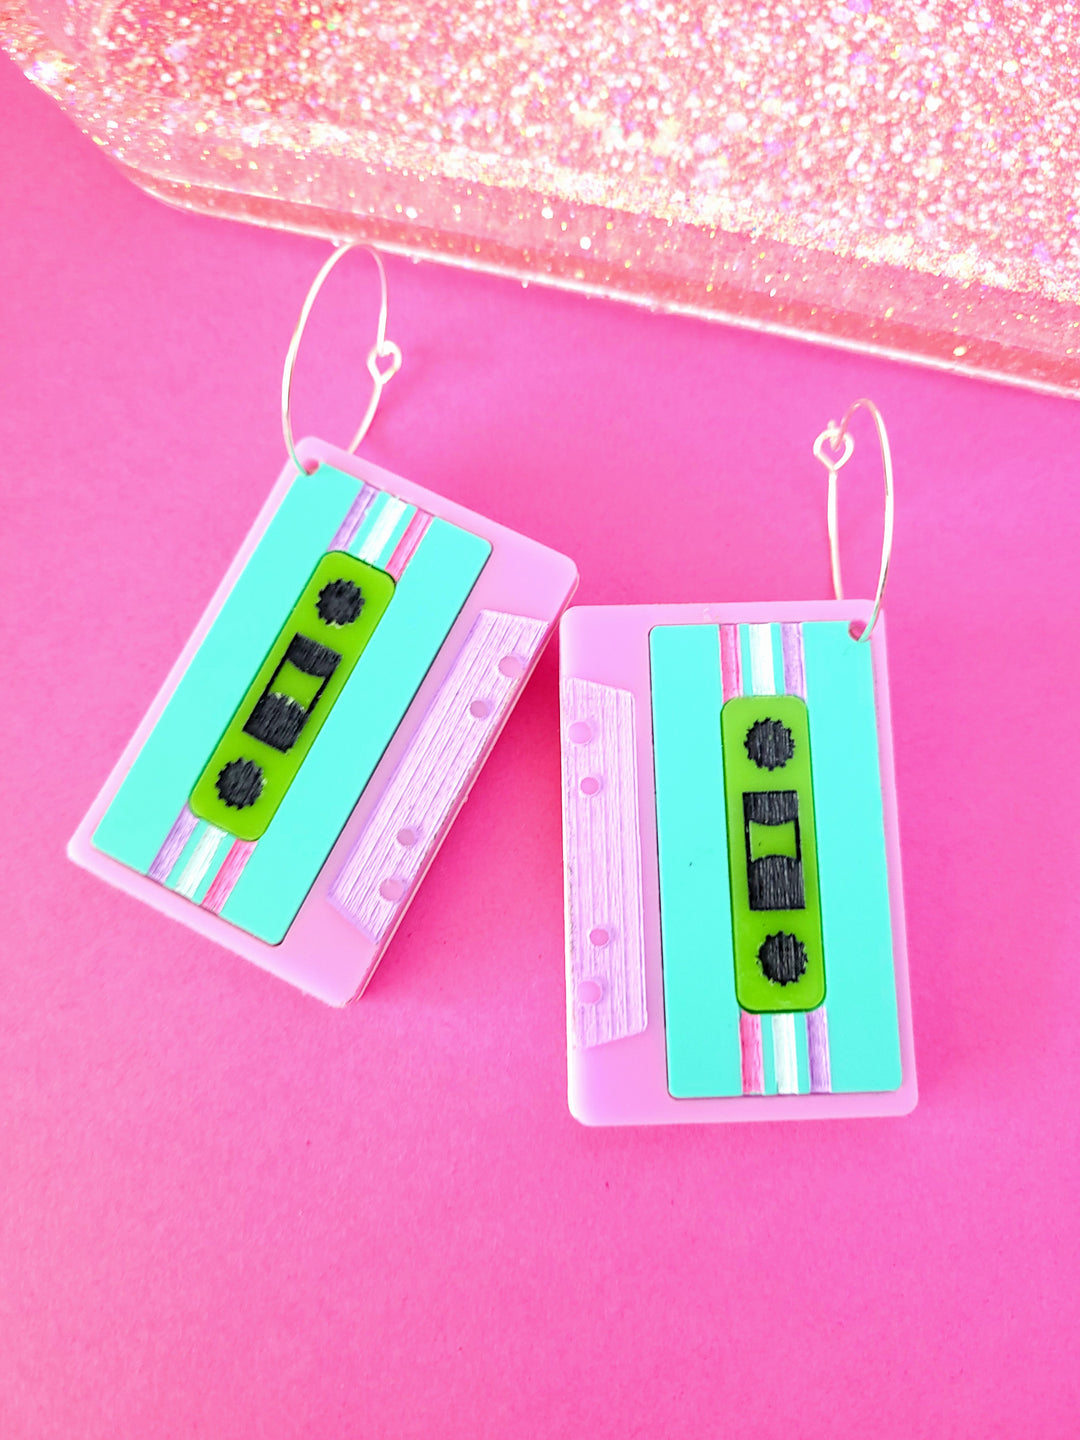 Cassette Tape Earrings